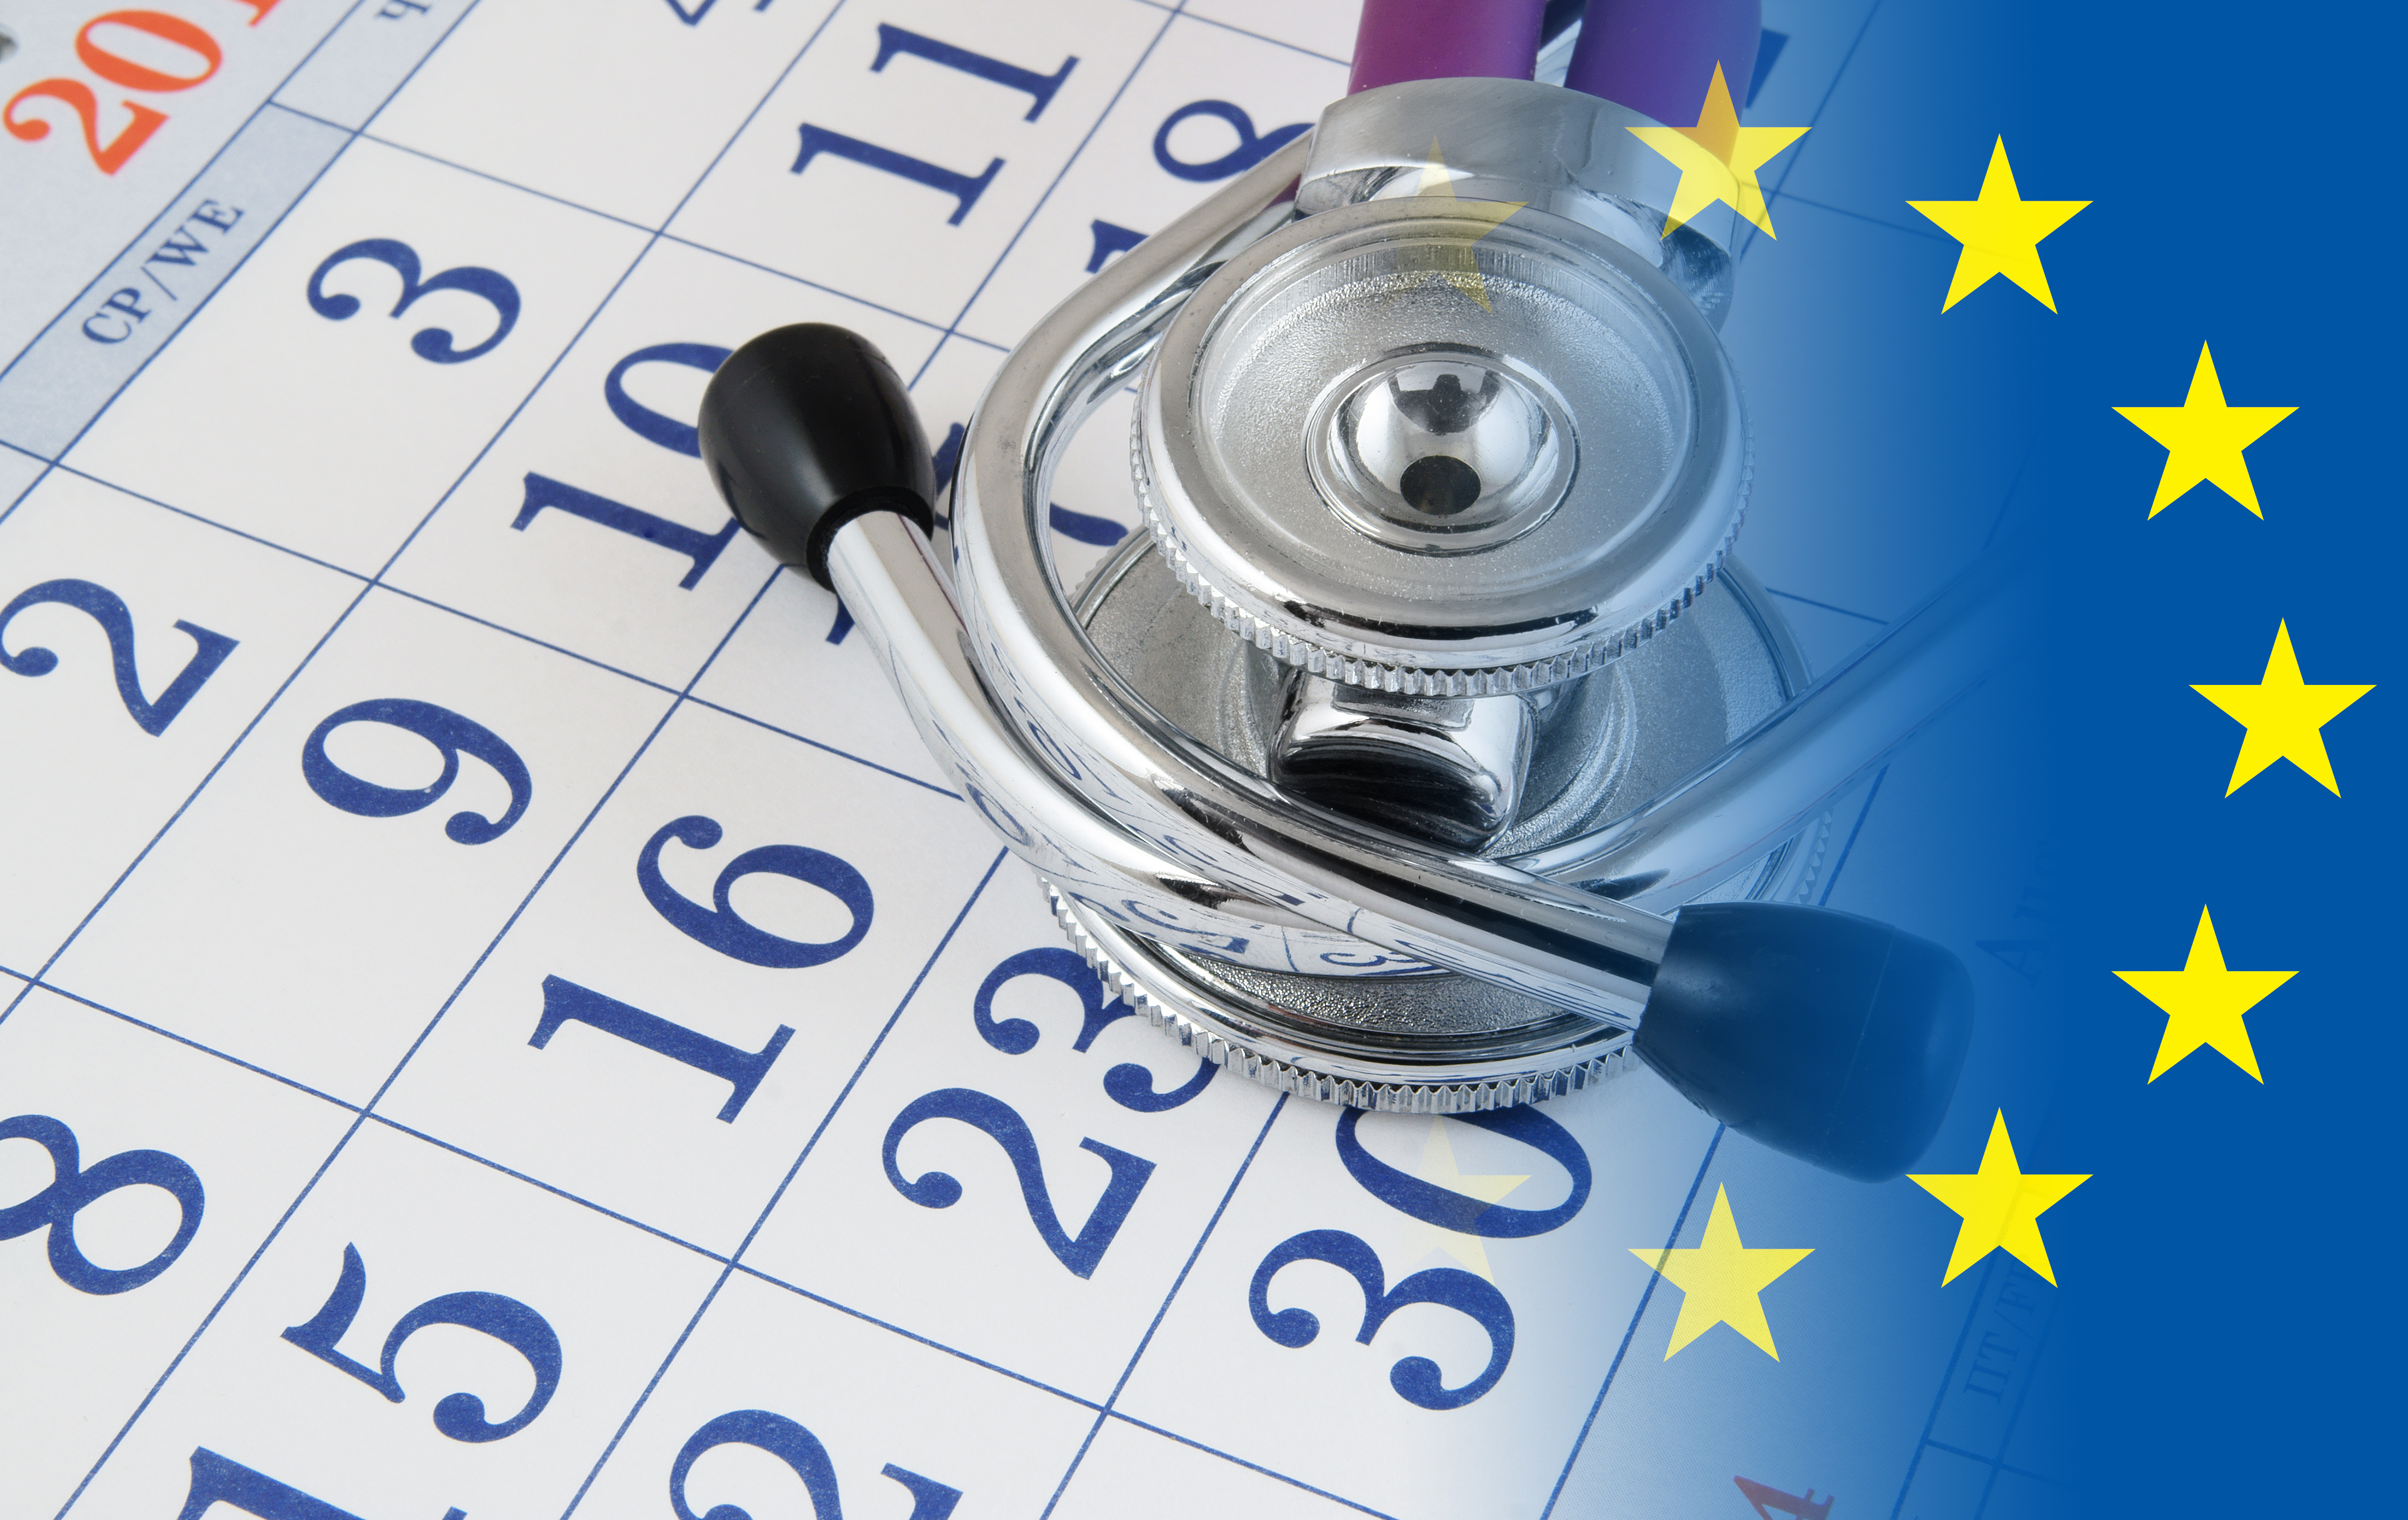 Post-Market Surveillance PMS Medical Devices Calendar